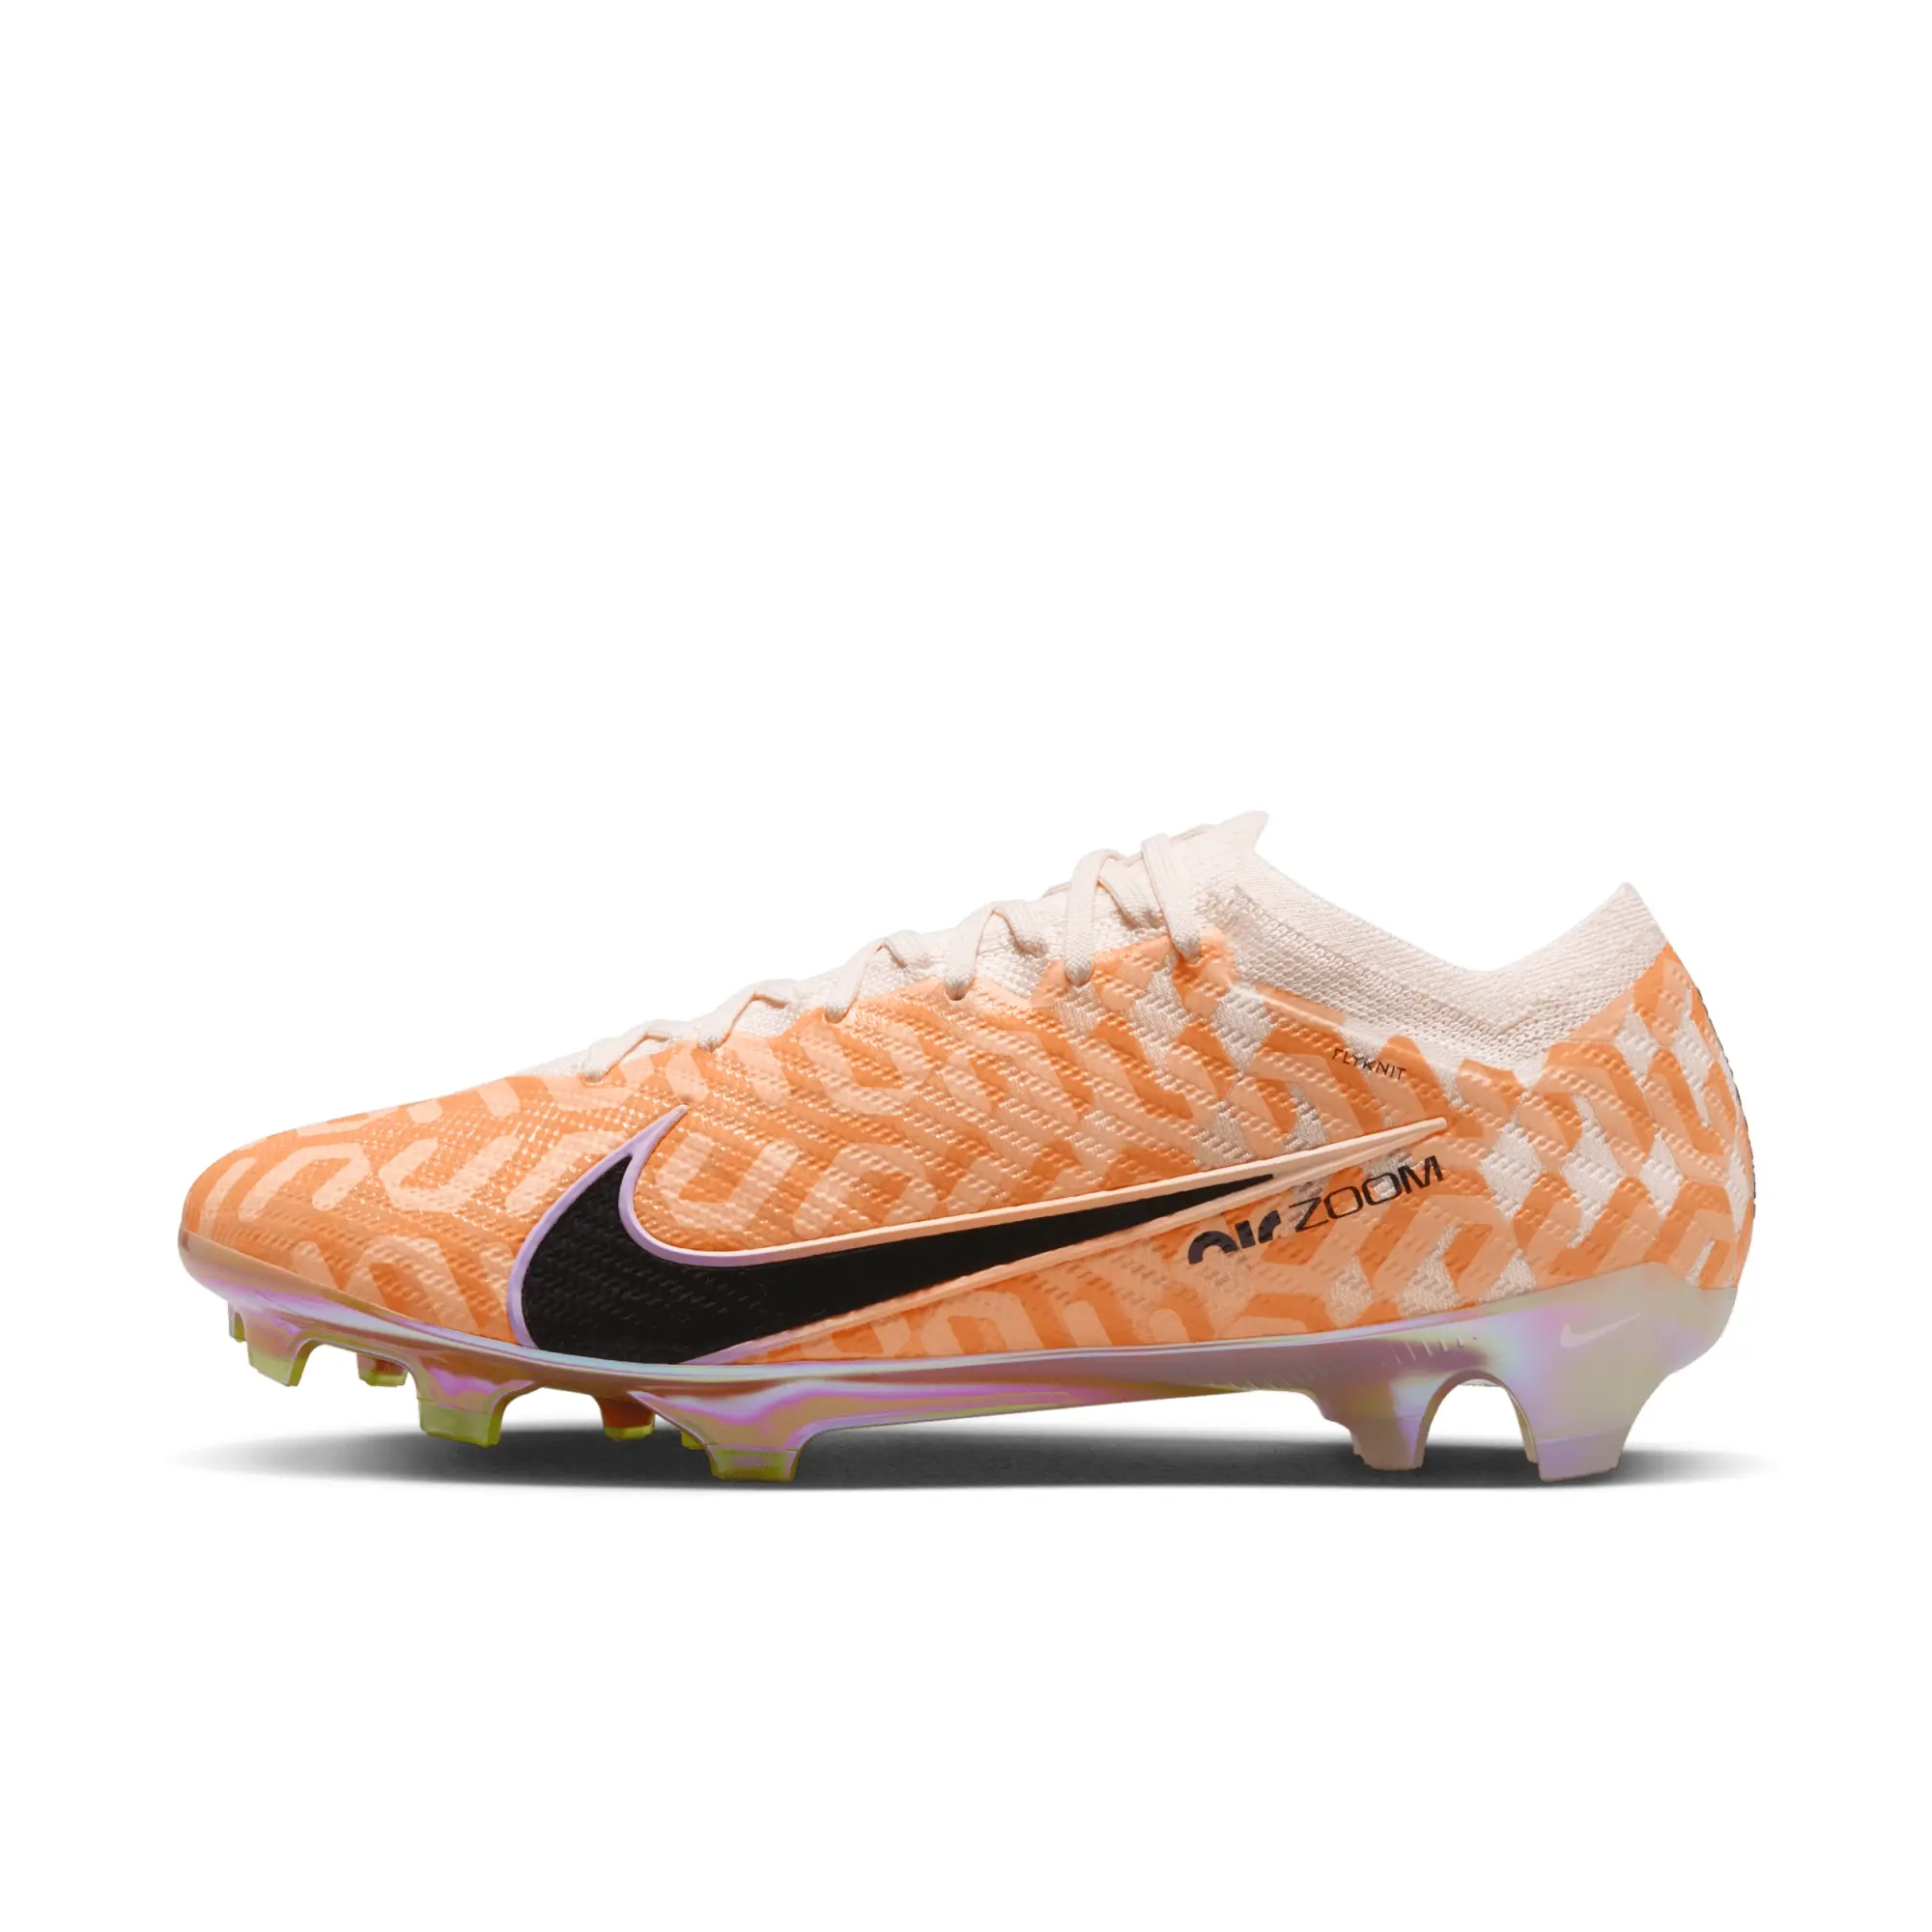 Nike Mercurial Vapor Elite FG Football Boots - Orange